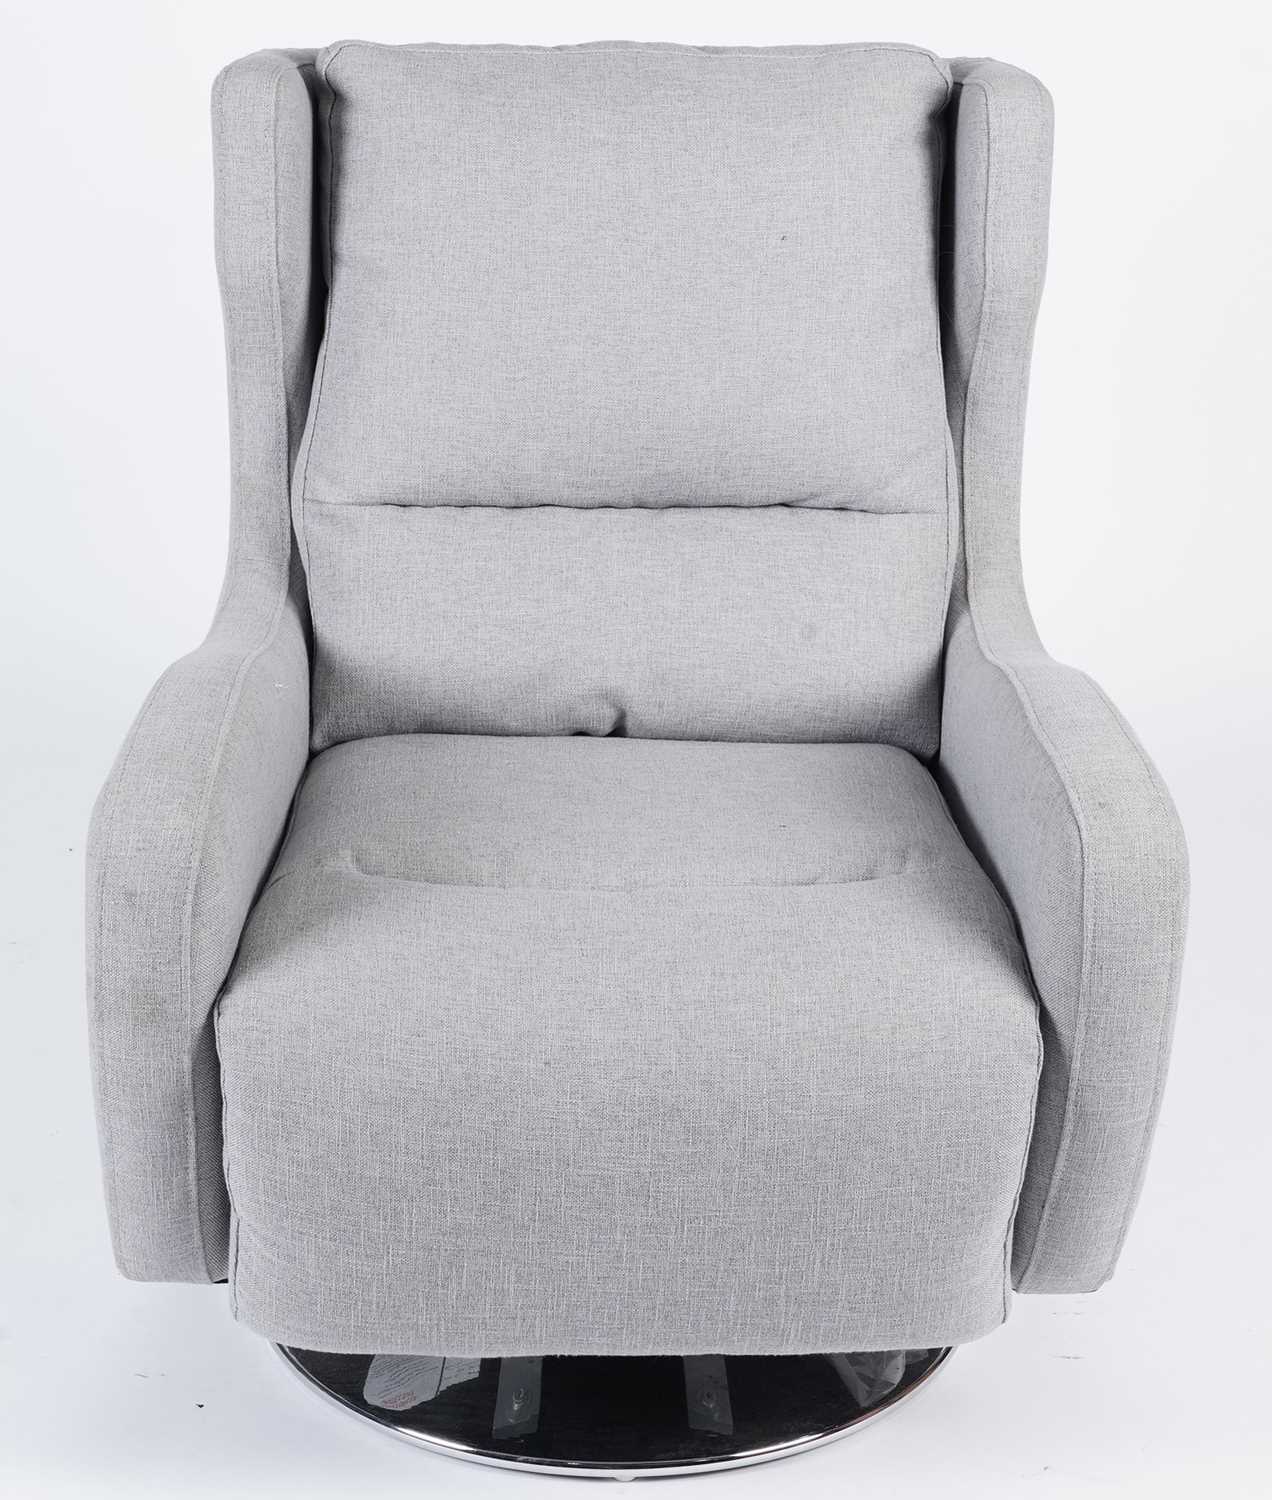 A modern grey/light blue upholstered swivel armchair - Image 4 of 8